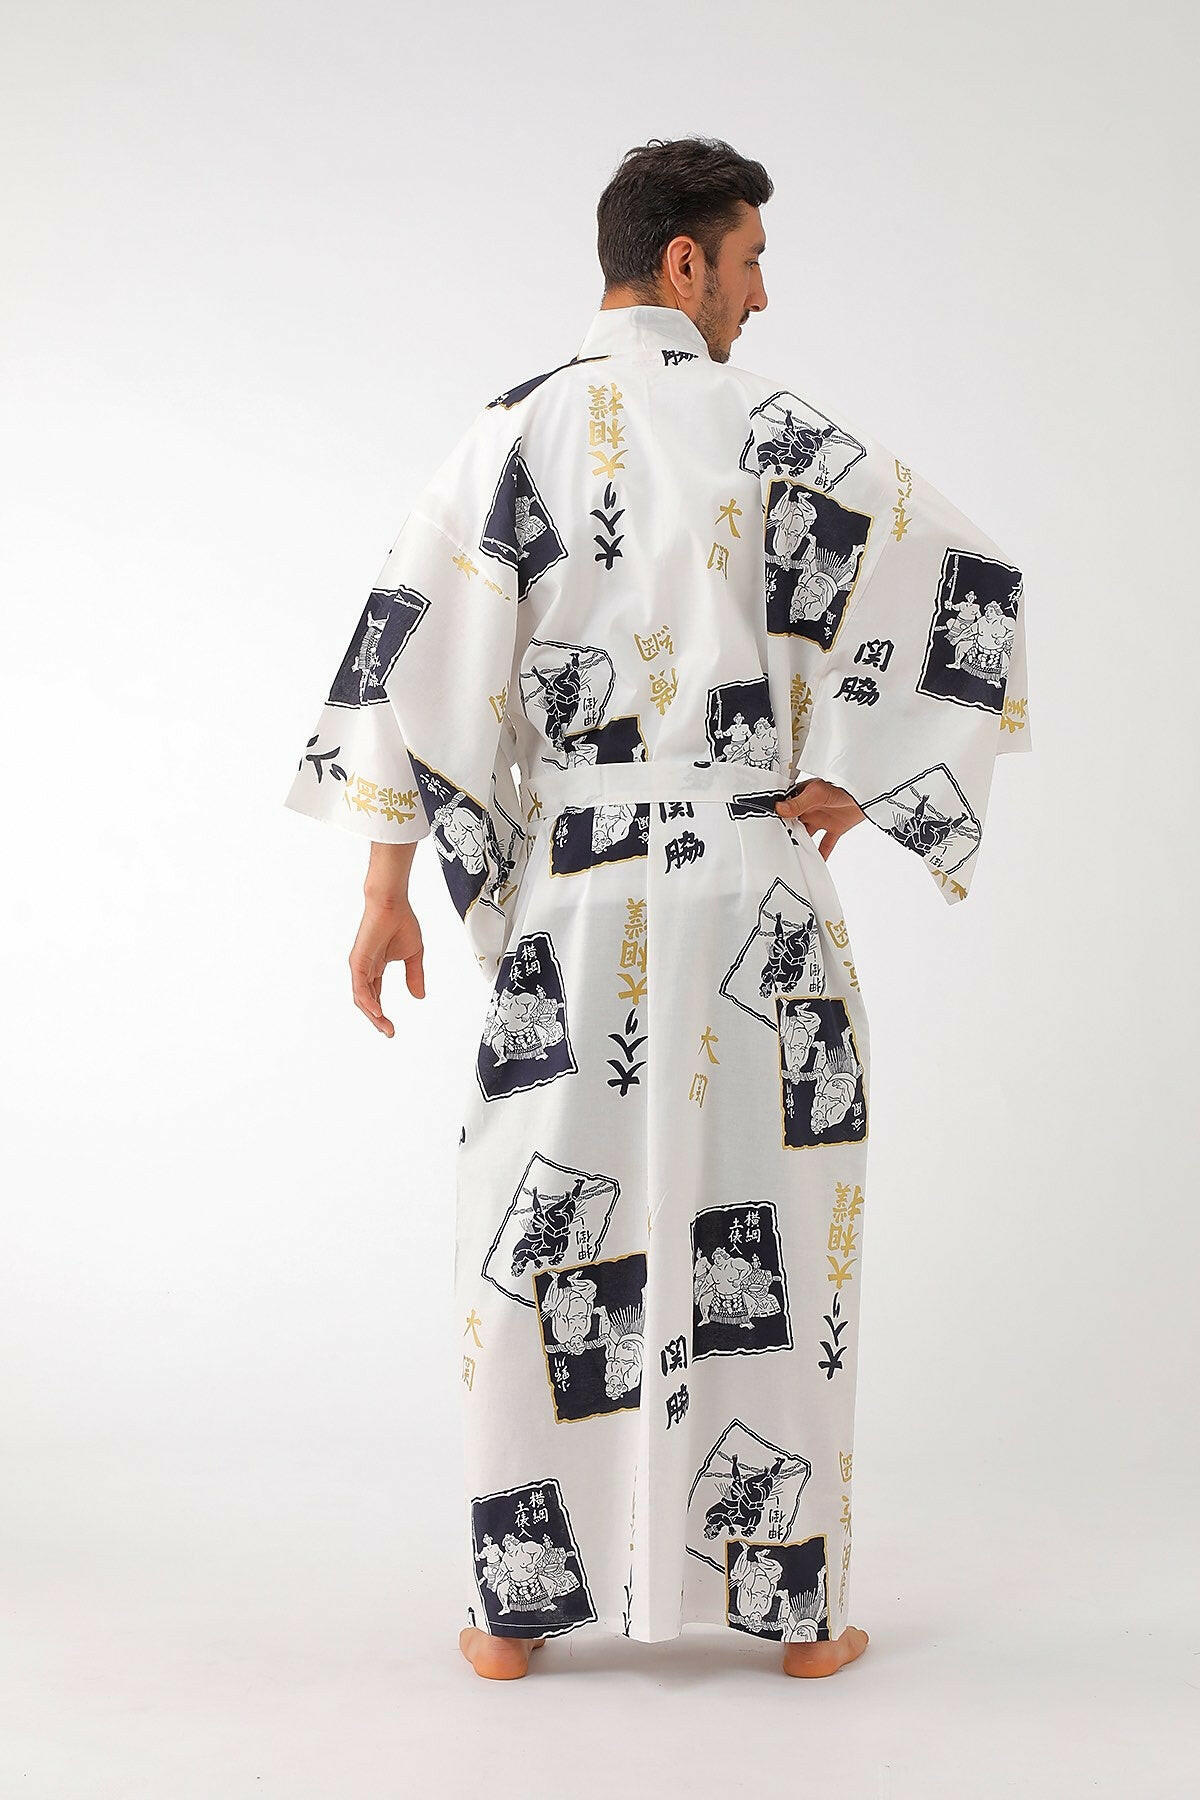 Men SUMO Wrestler Cotton Yukata Kimono Color White Model Rear View